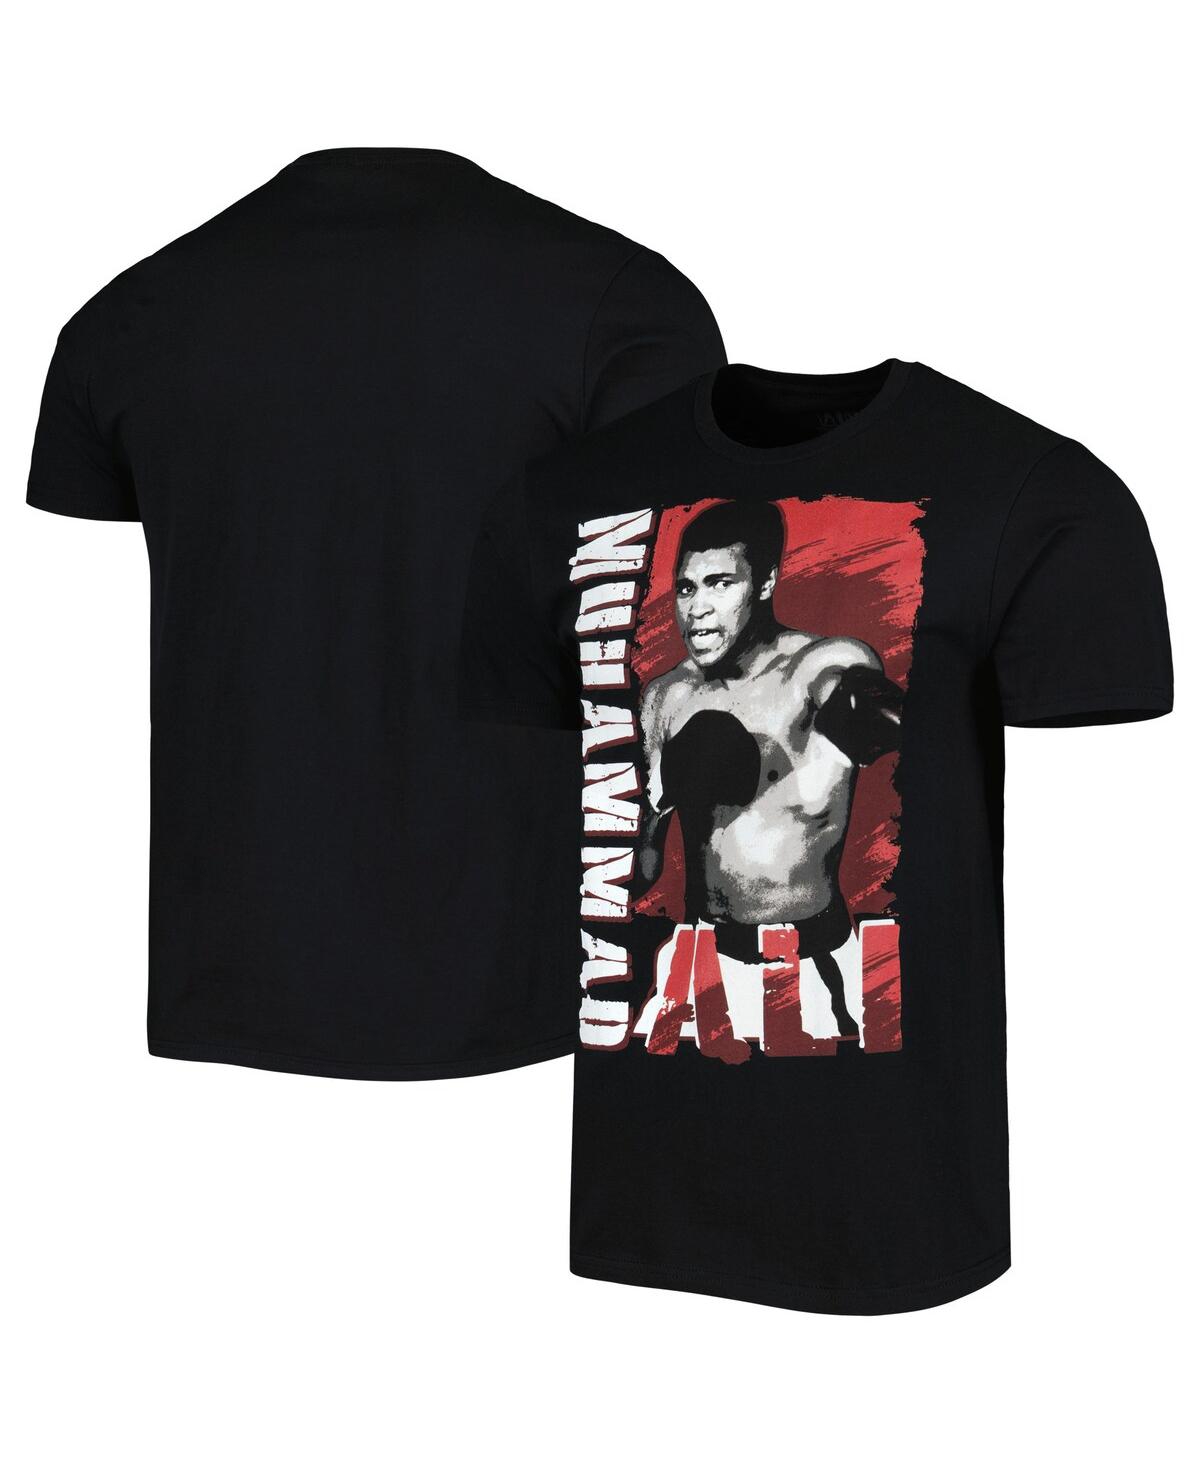 Men's and Women's Black Muhammad Ali Graphic T-shirt - Black